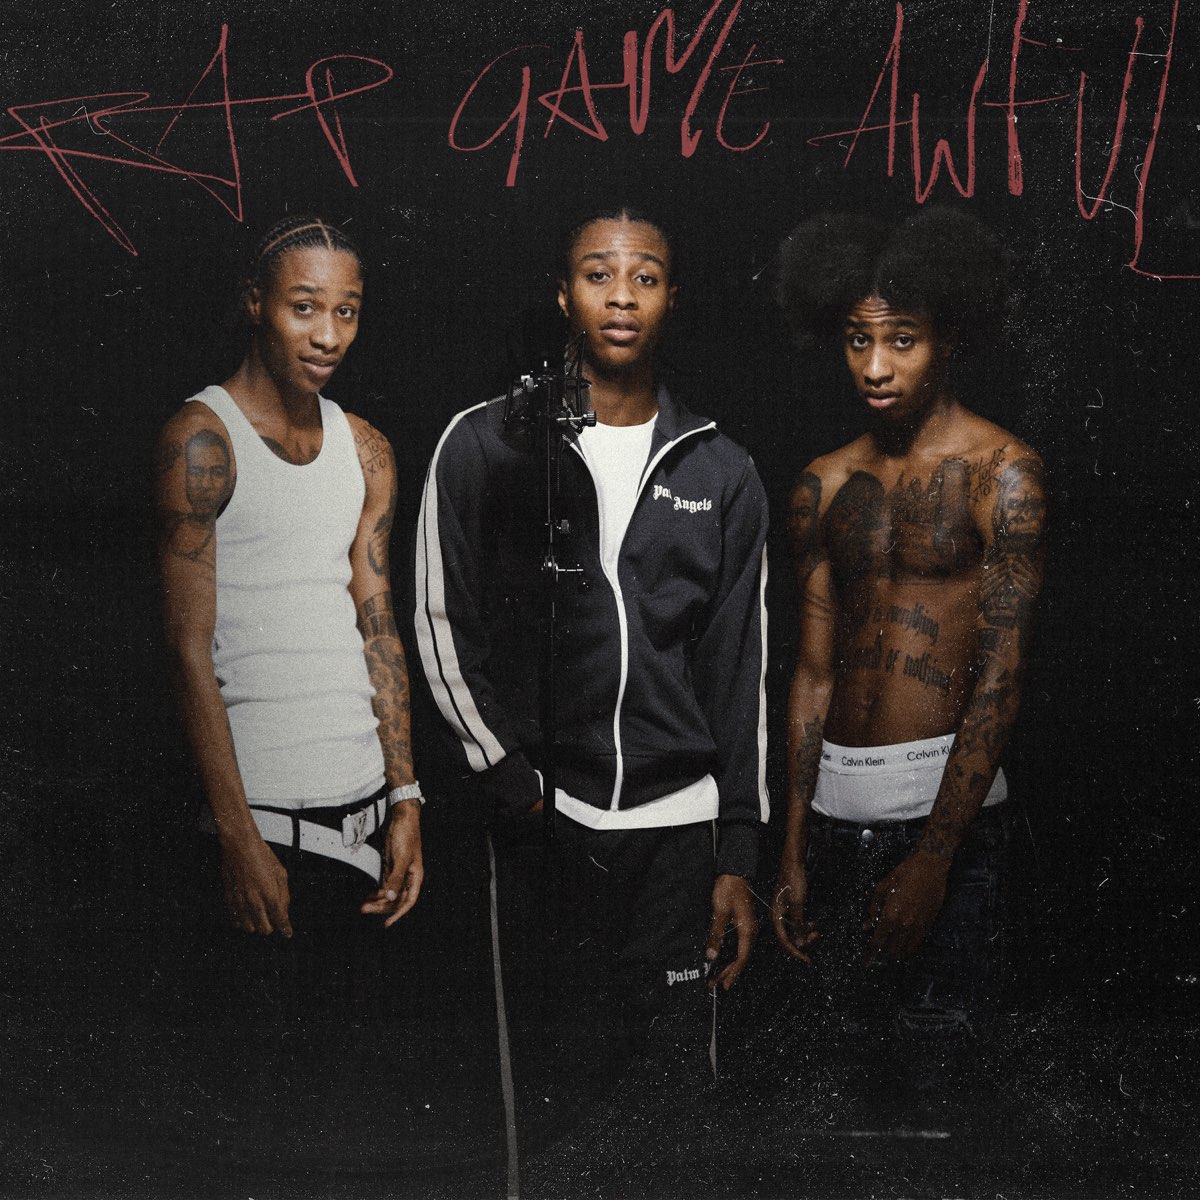 ‎Rap Game Awful - Album by Clavish - Apple Music